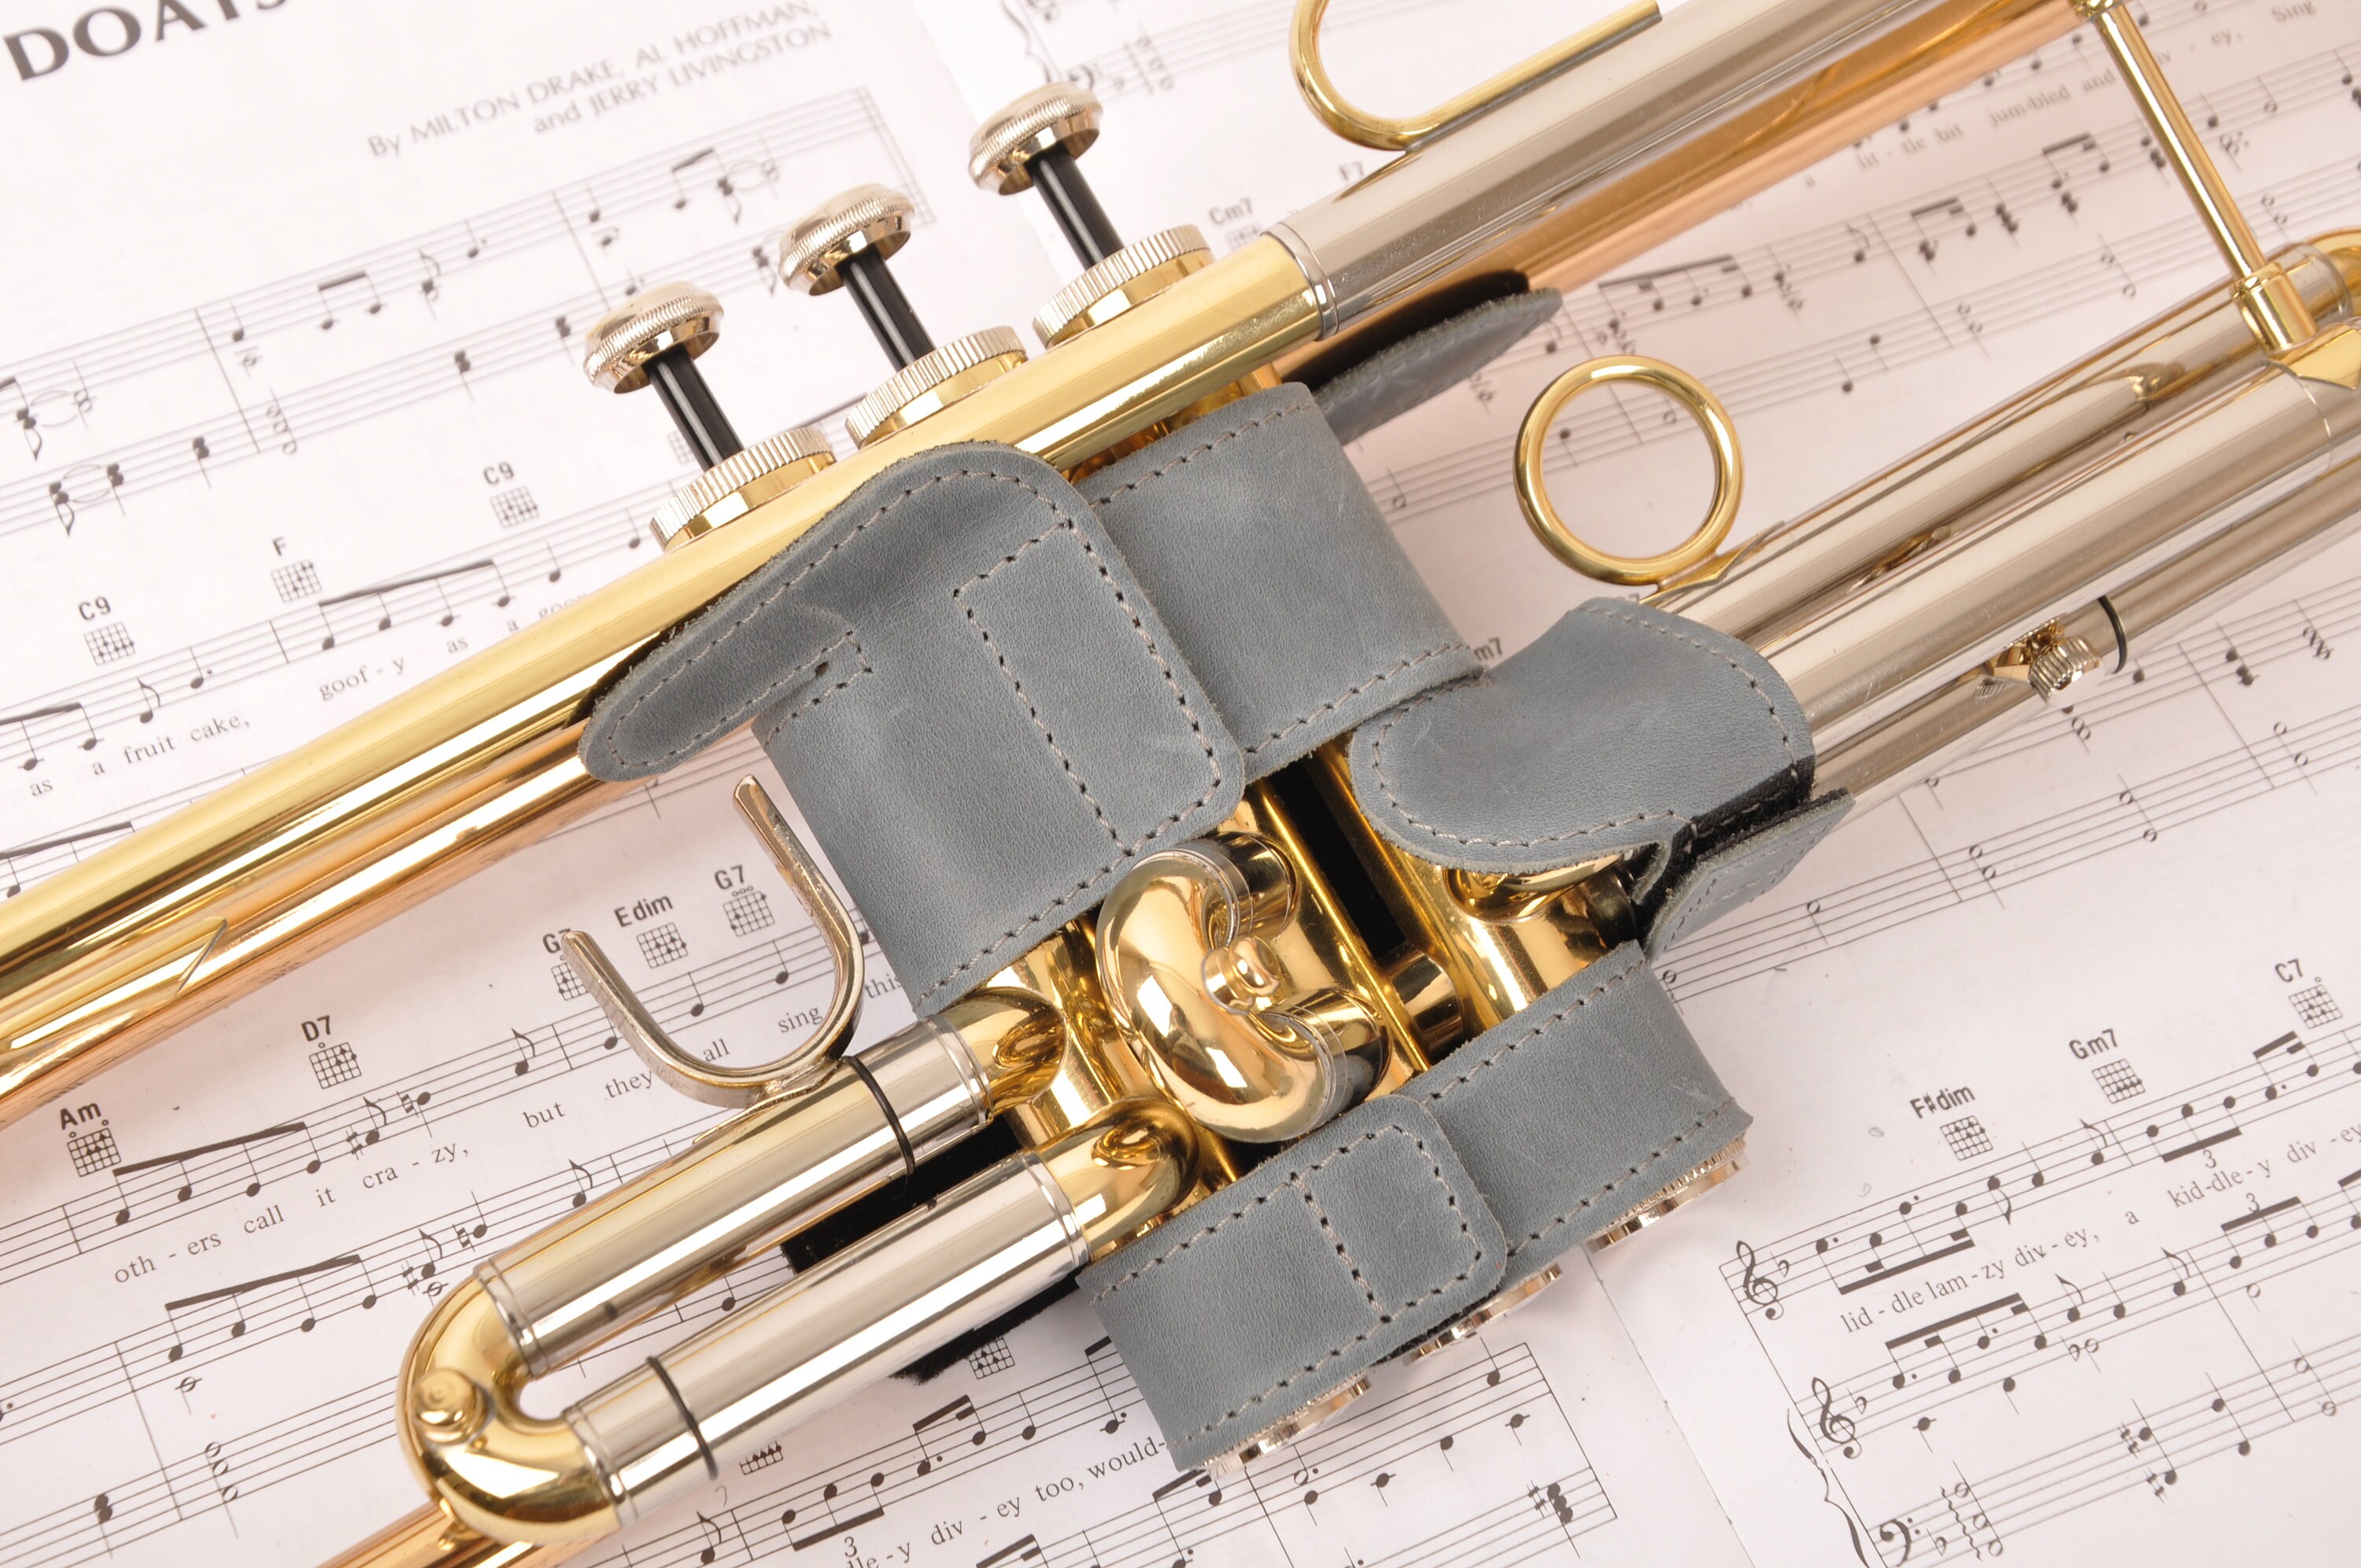 Trumpet valve protector, trumpet valve guard